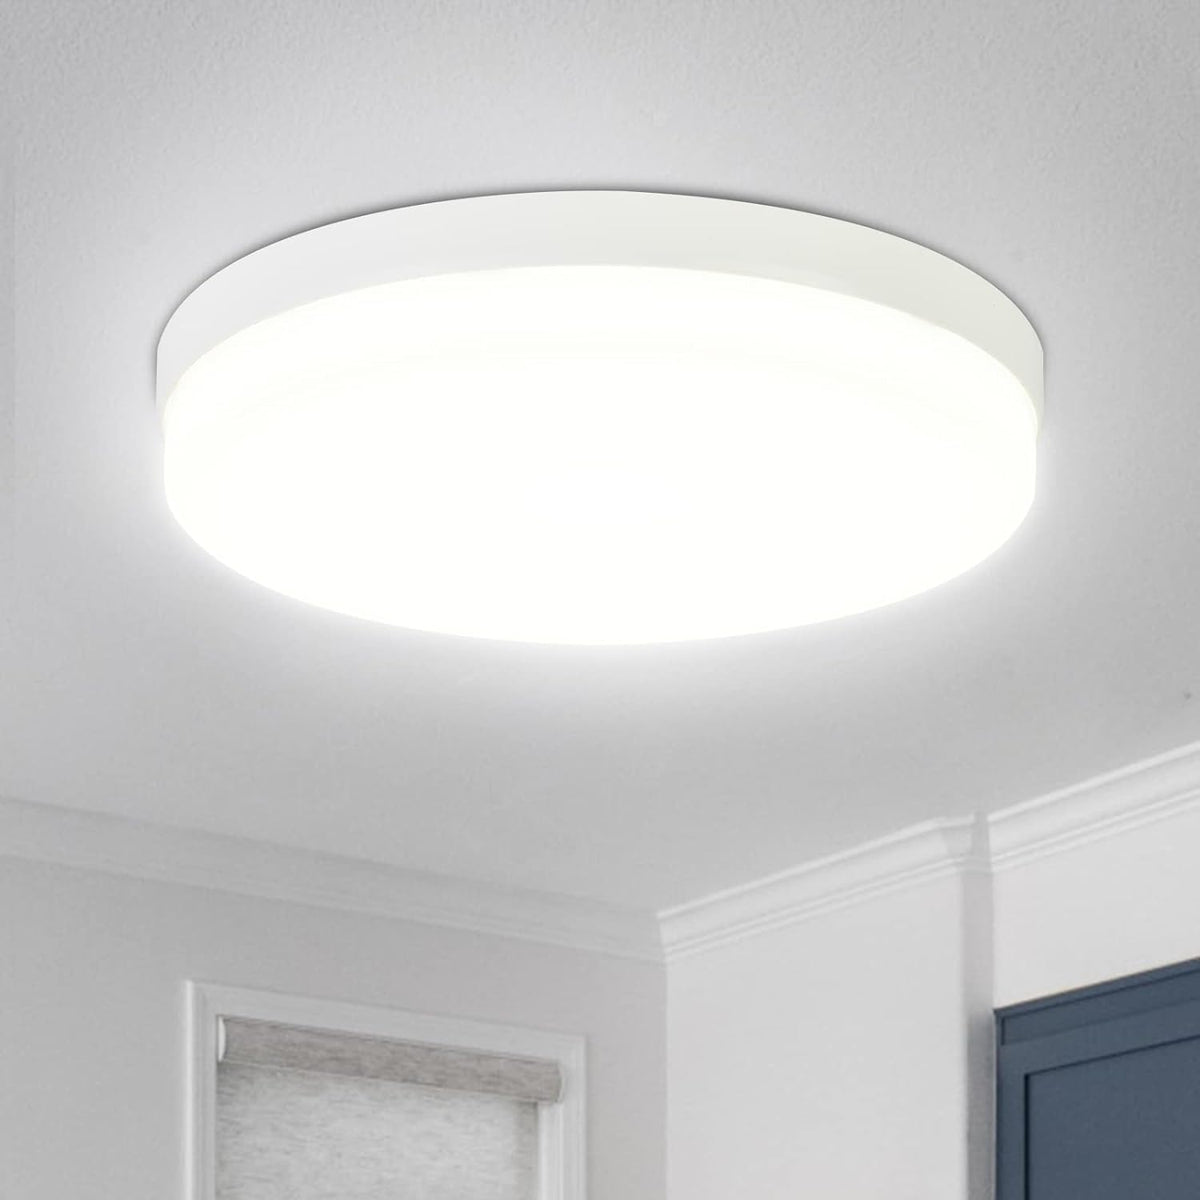 LED Kitchen Ceiling Light, 18W 1850lm Round Ceiling Lights Daylight White 5000K, 120W Equivalent, Dome, Flush Ceiling Light